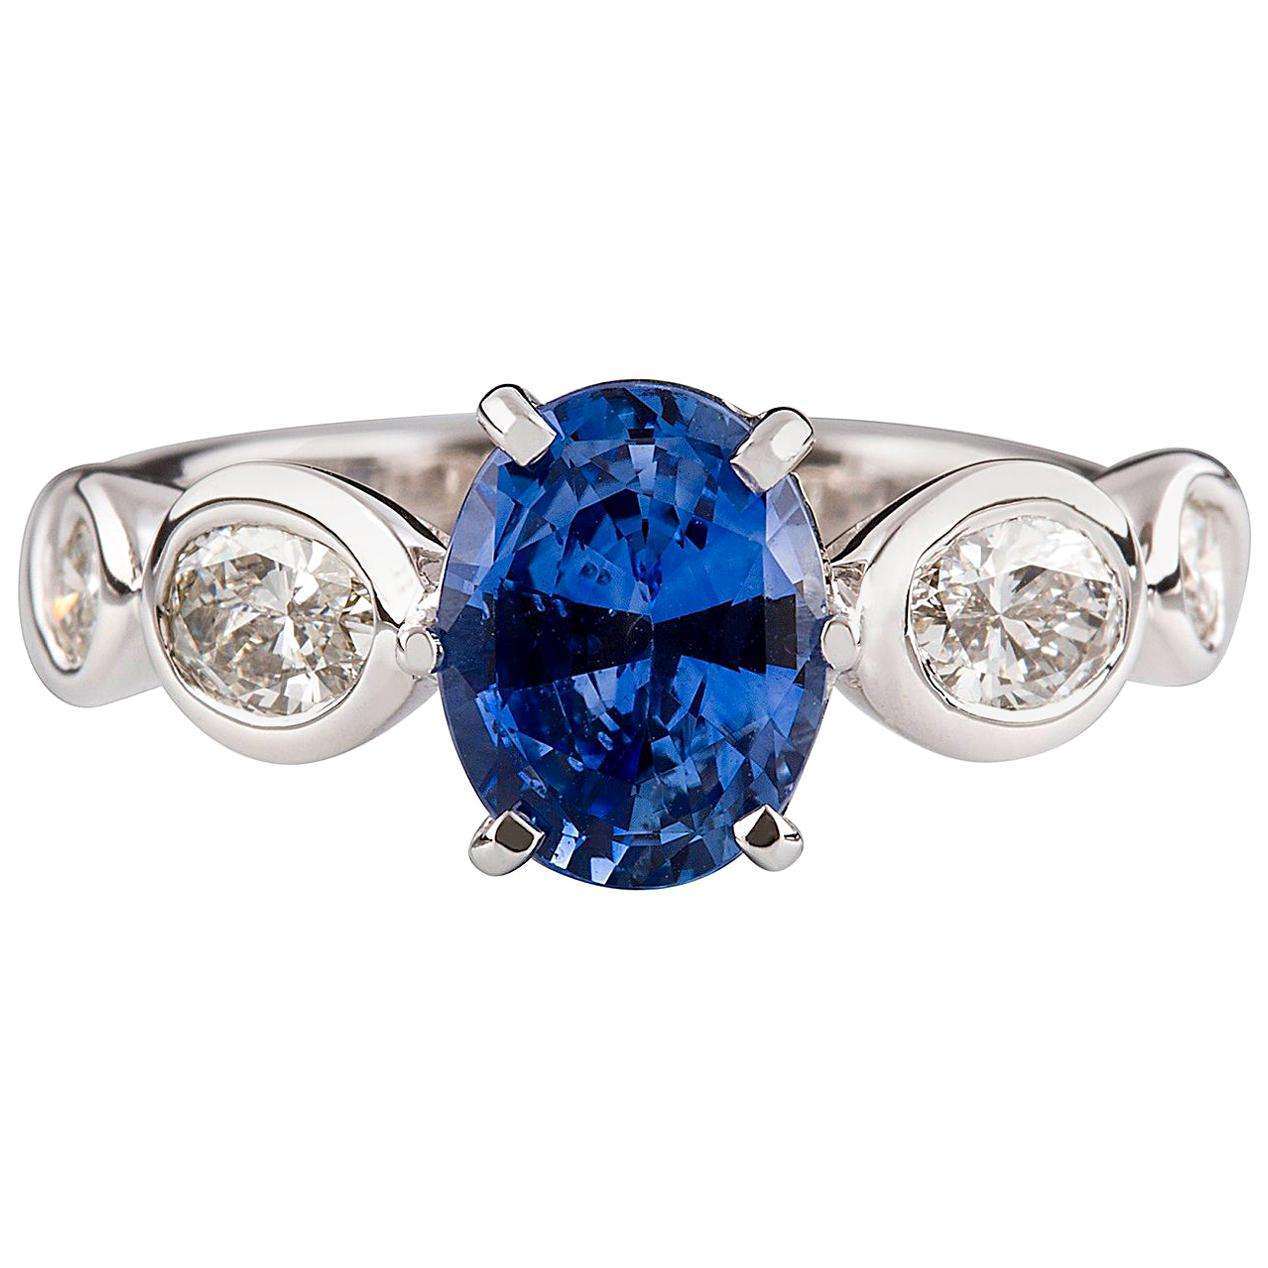 2.08 Carat Oval Cut Ceylon Sapphire 1.18 Carat Diamond Engagement Ring For Sale